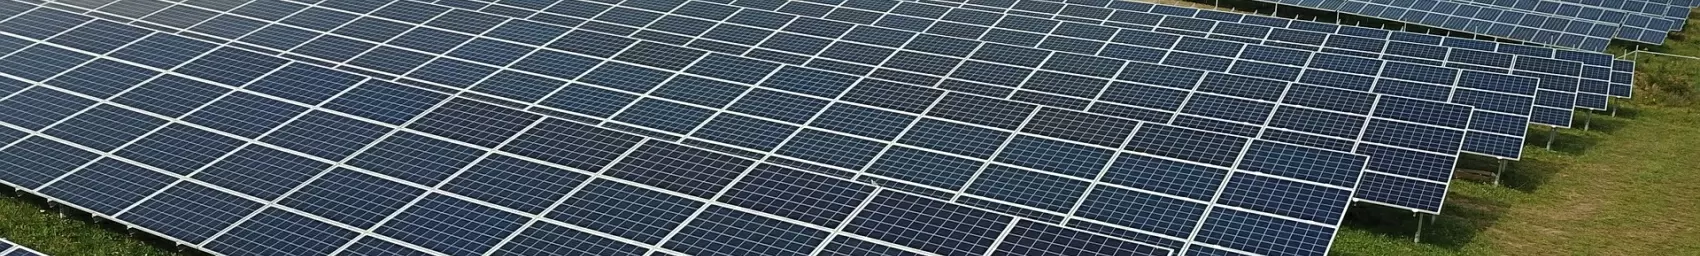 Panels Photovoltaische Solarenergie